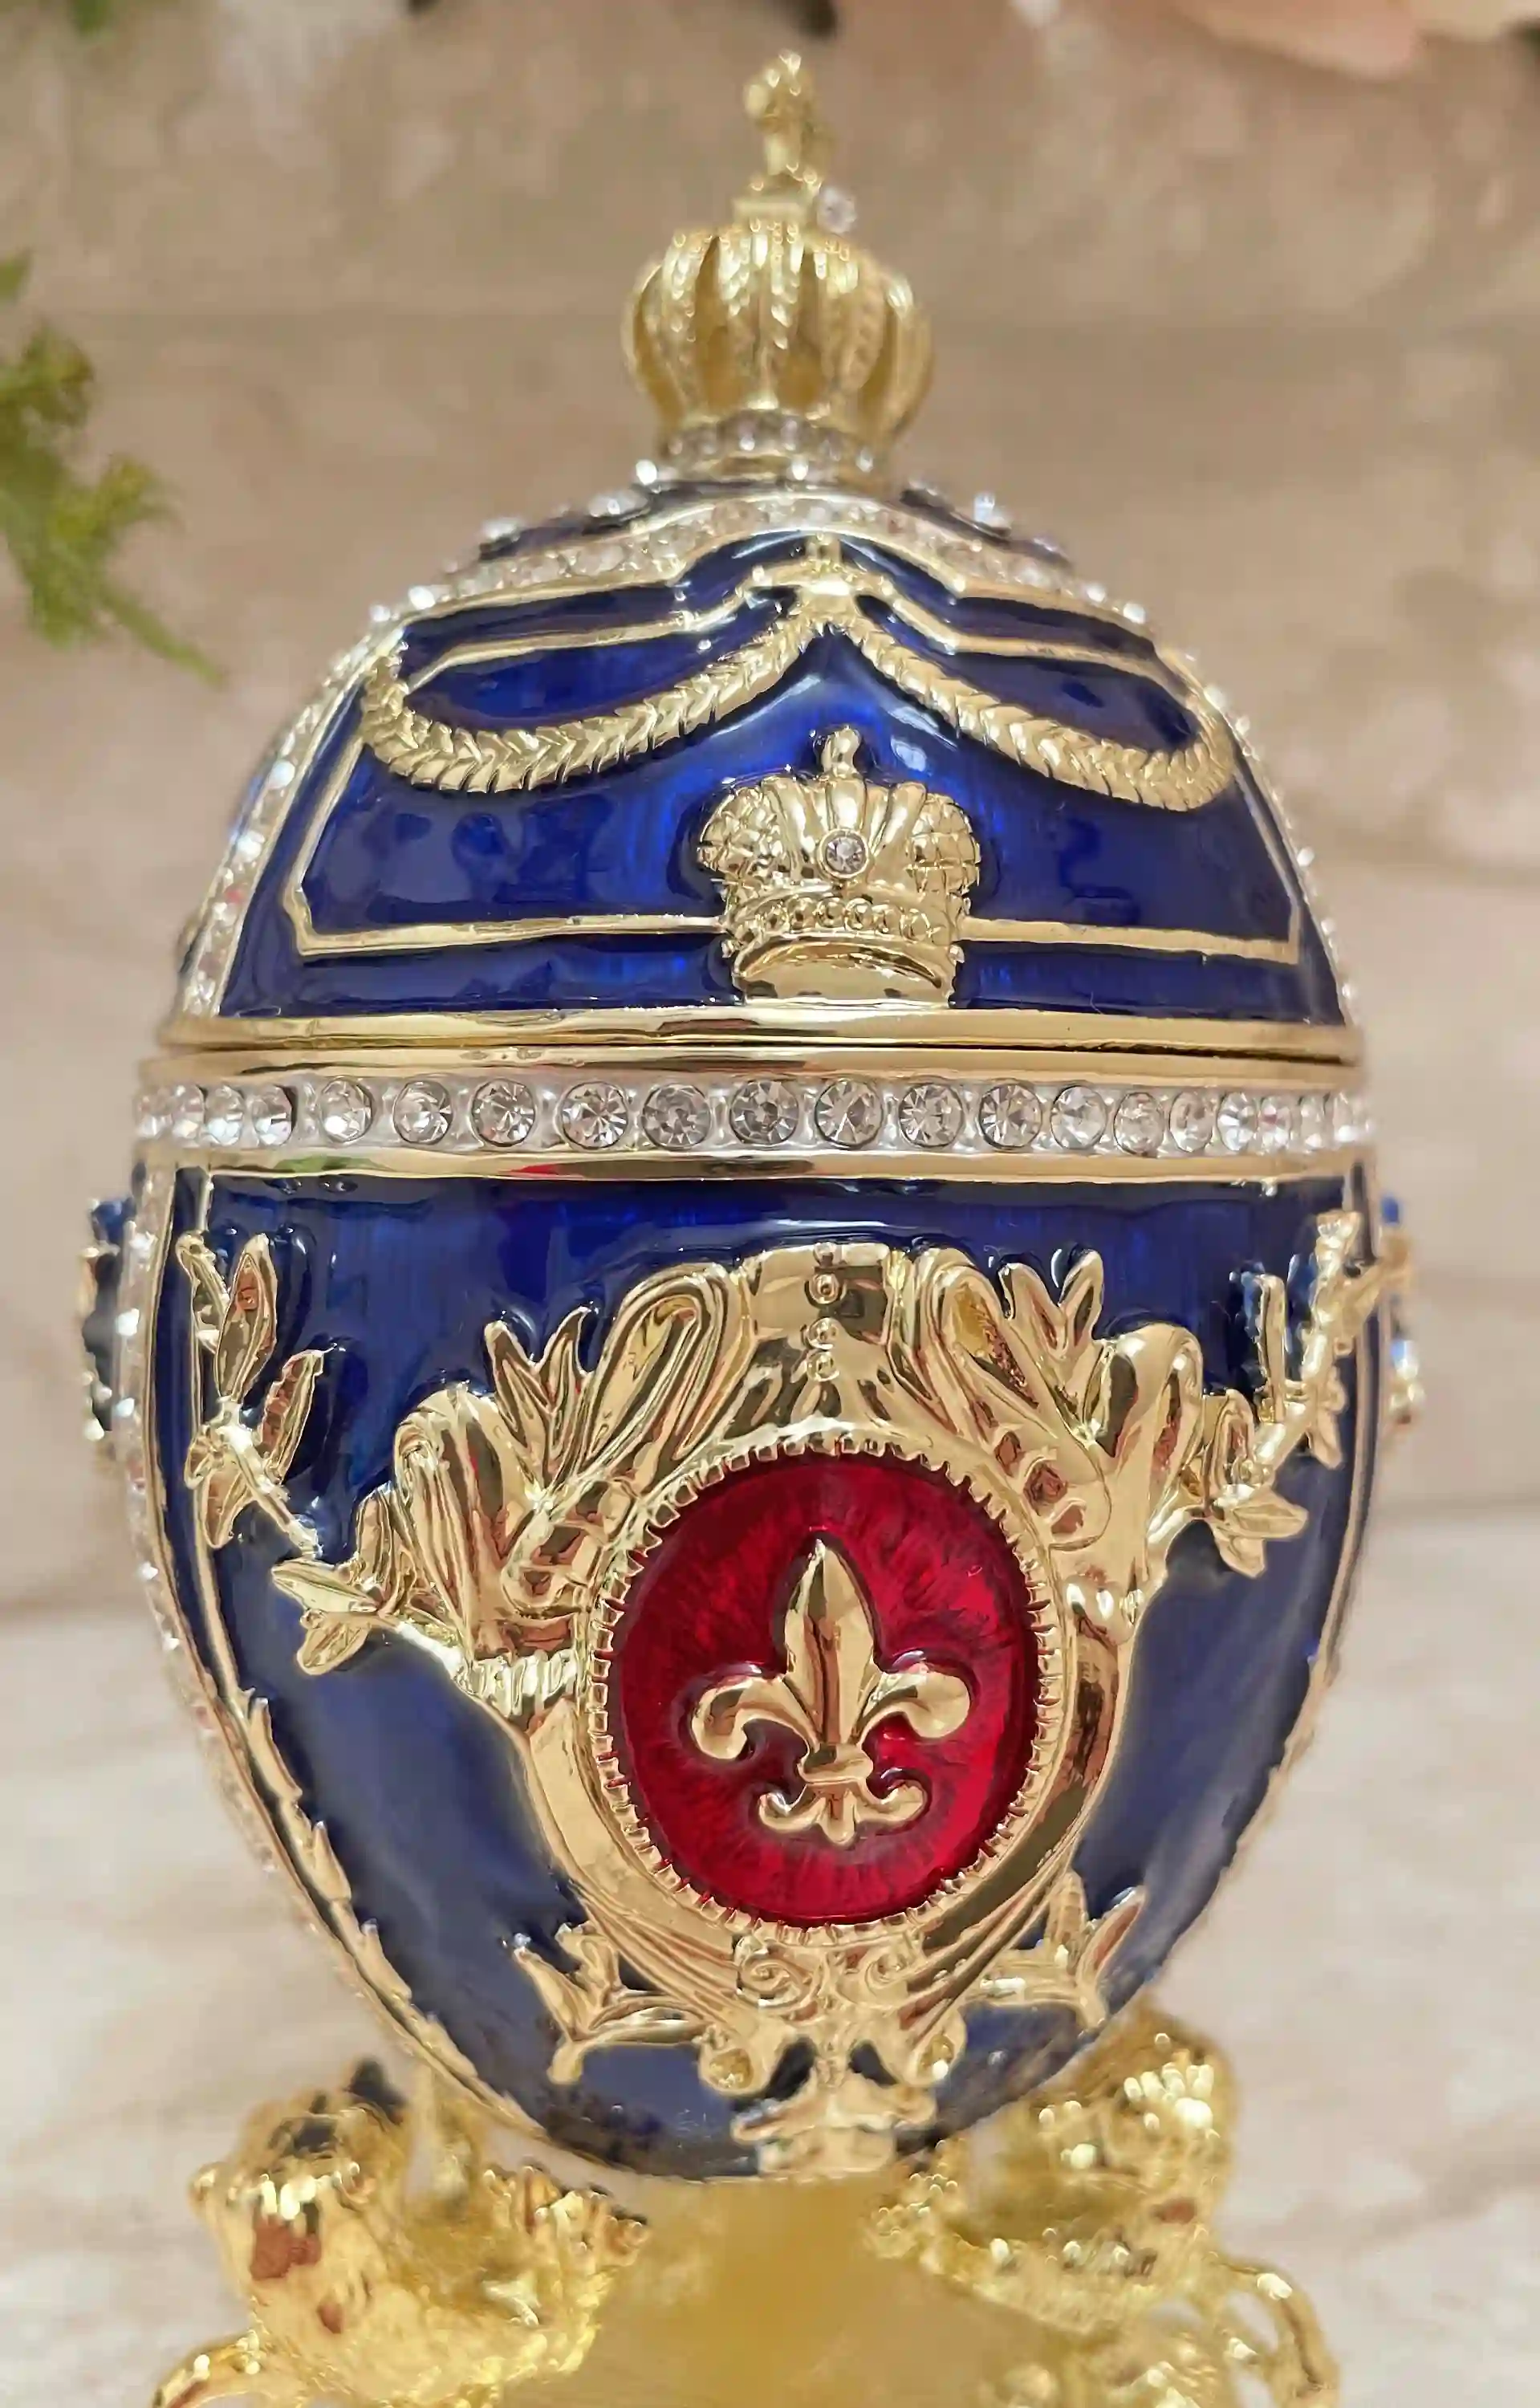 DESIGNER Blue Faberge egg Ornament, Faberge Egg Trinket Box, 24k GOLD Swarovski Diamond HANDSET, Faberge egg Style Graduation gift for Son 